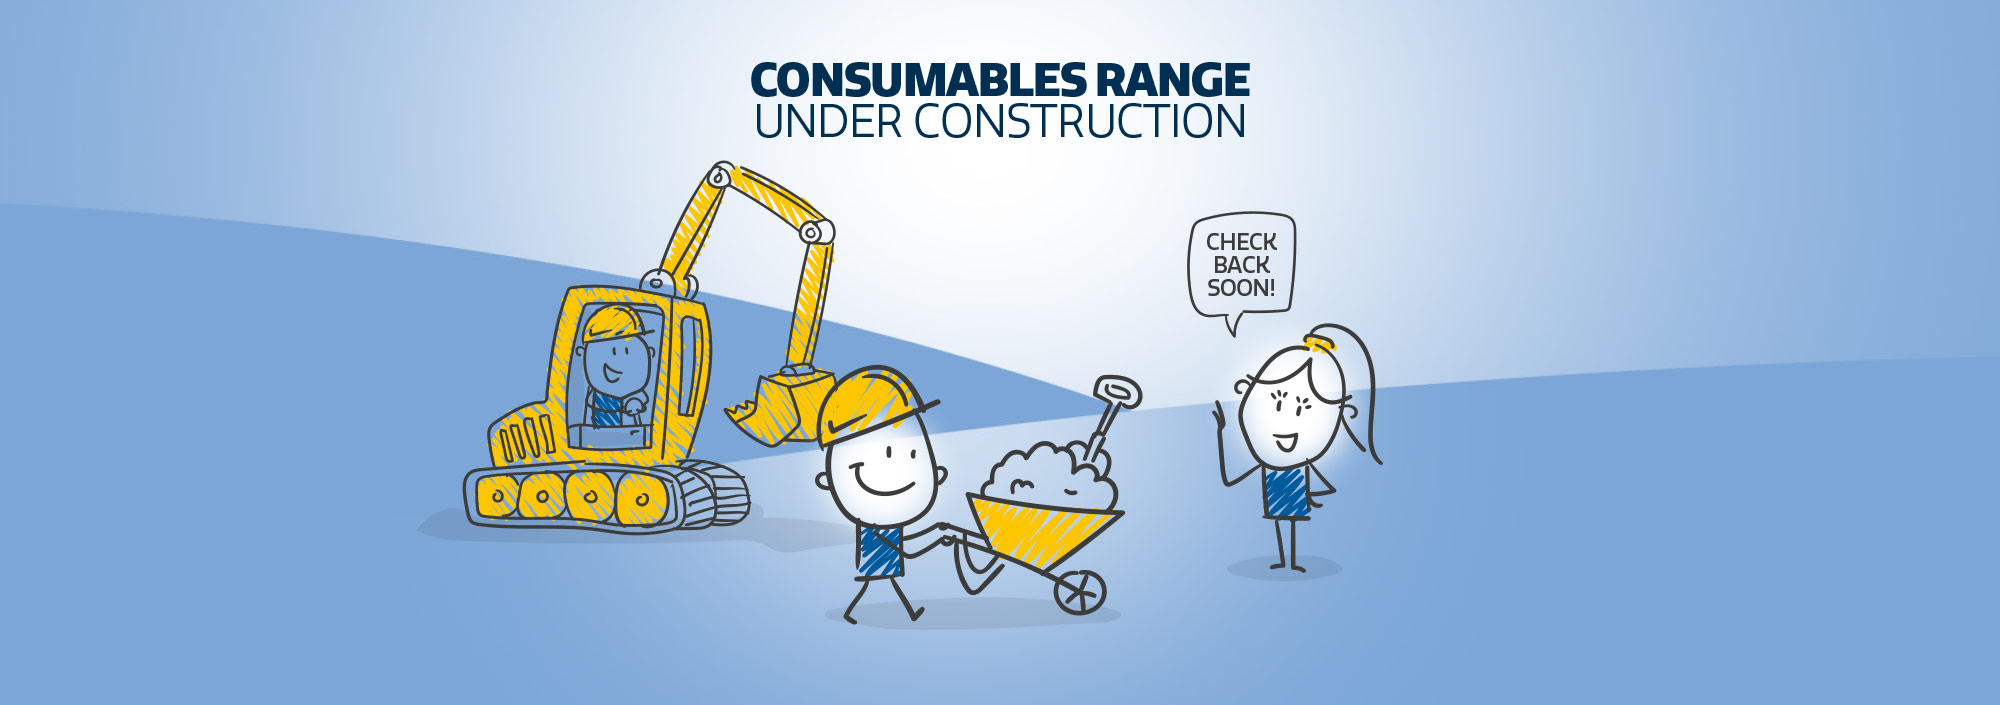 Consumables range under construction